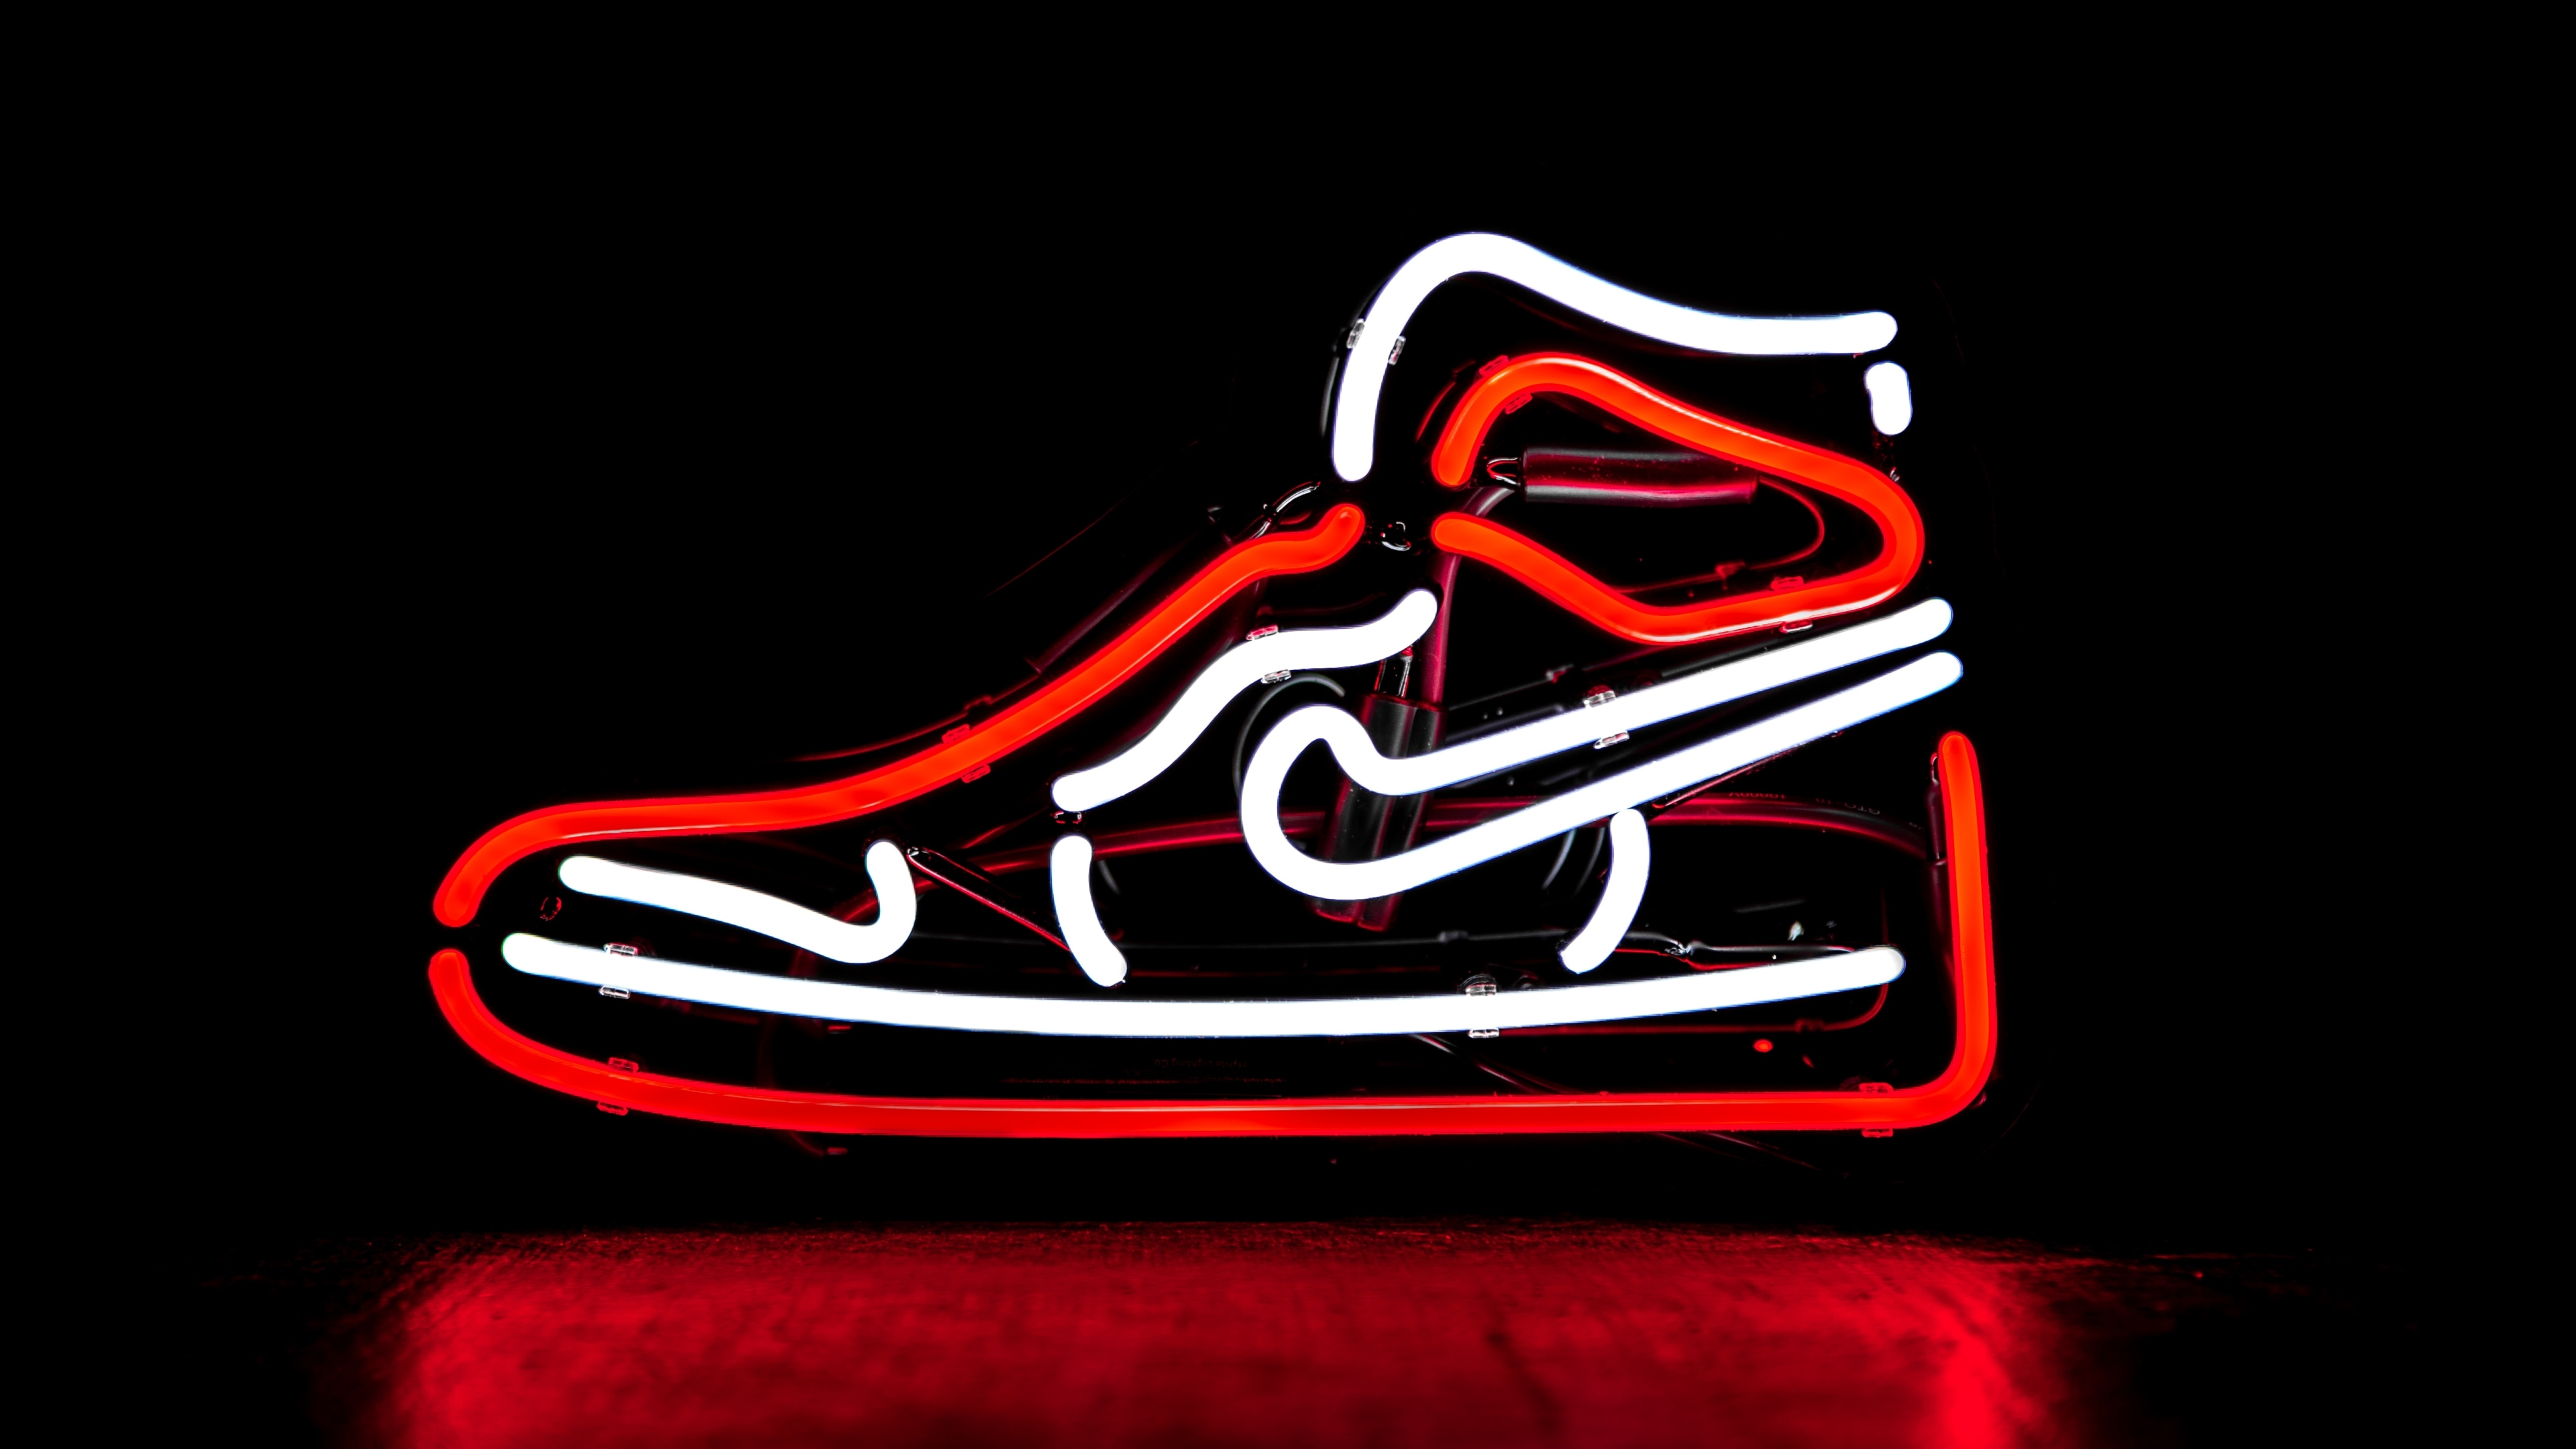 3840x2160 Neon Jordan Retro Shoe 4K Wallpaper, HD Artist 4K Wallpapers